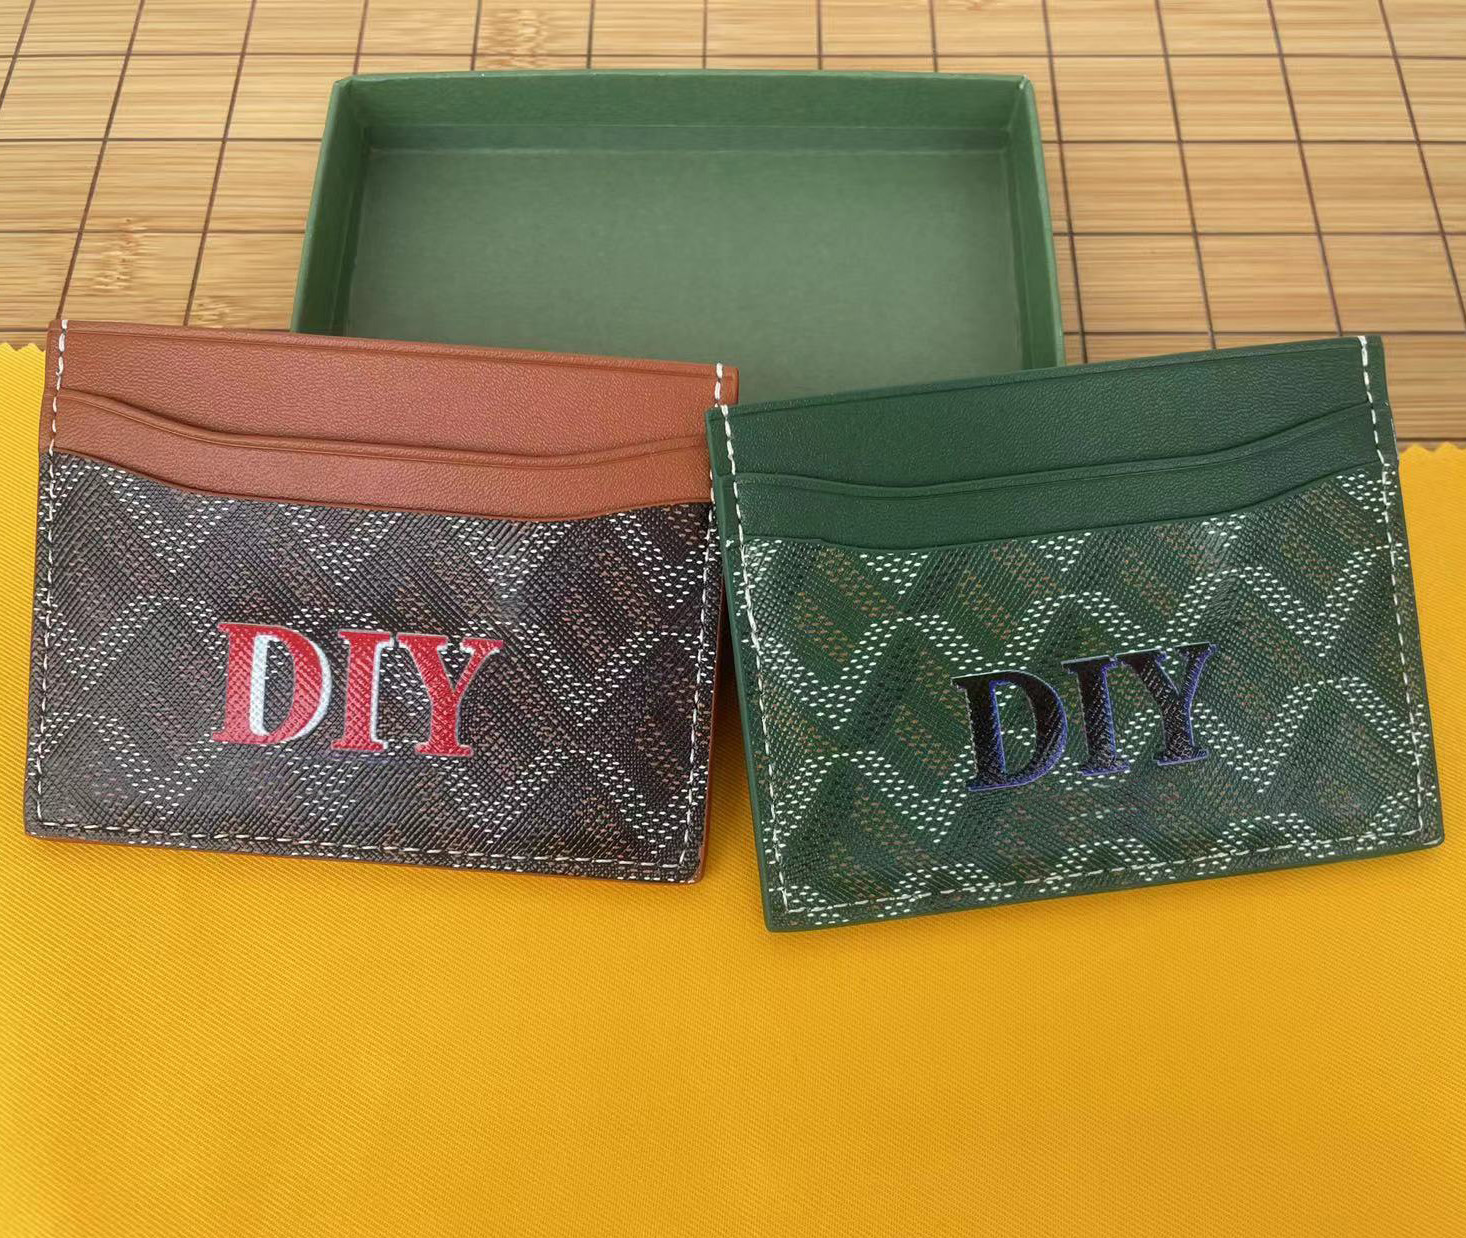 

Card Holders Clutch Bags handbag Totes DIY Do It Yourself handmade Customized handbag personalized bag customizing initials stripes B1